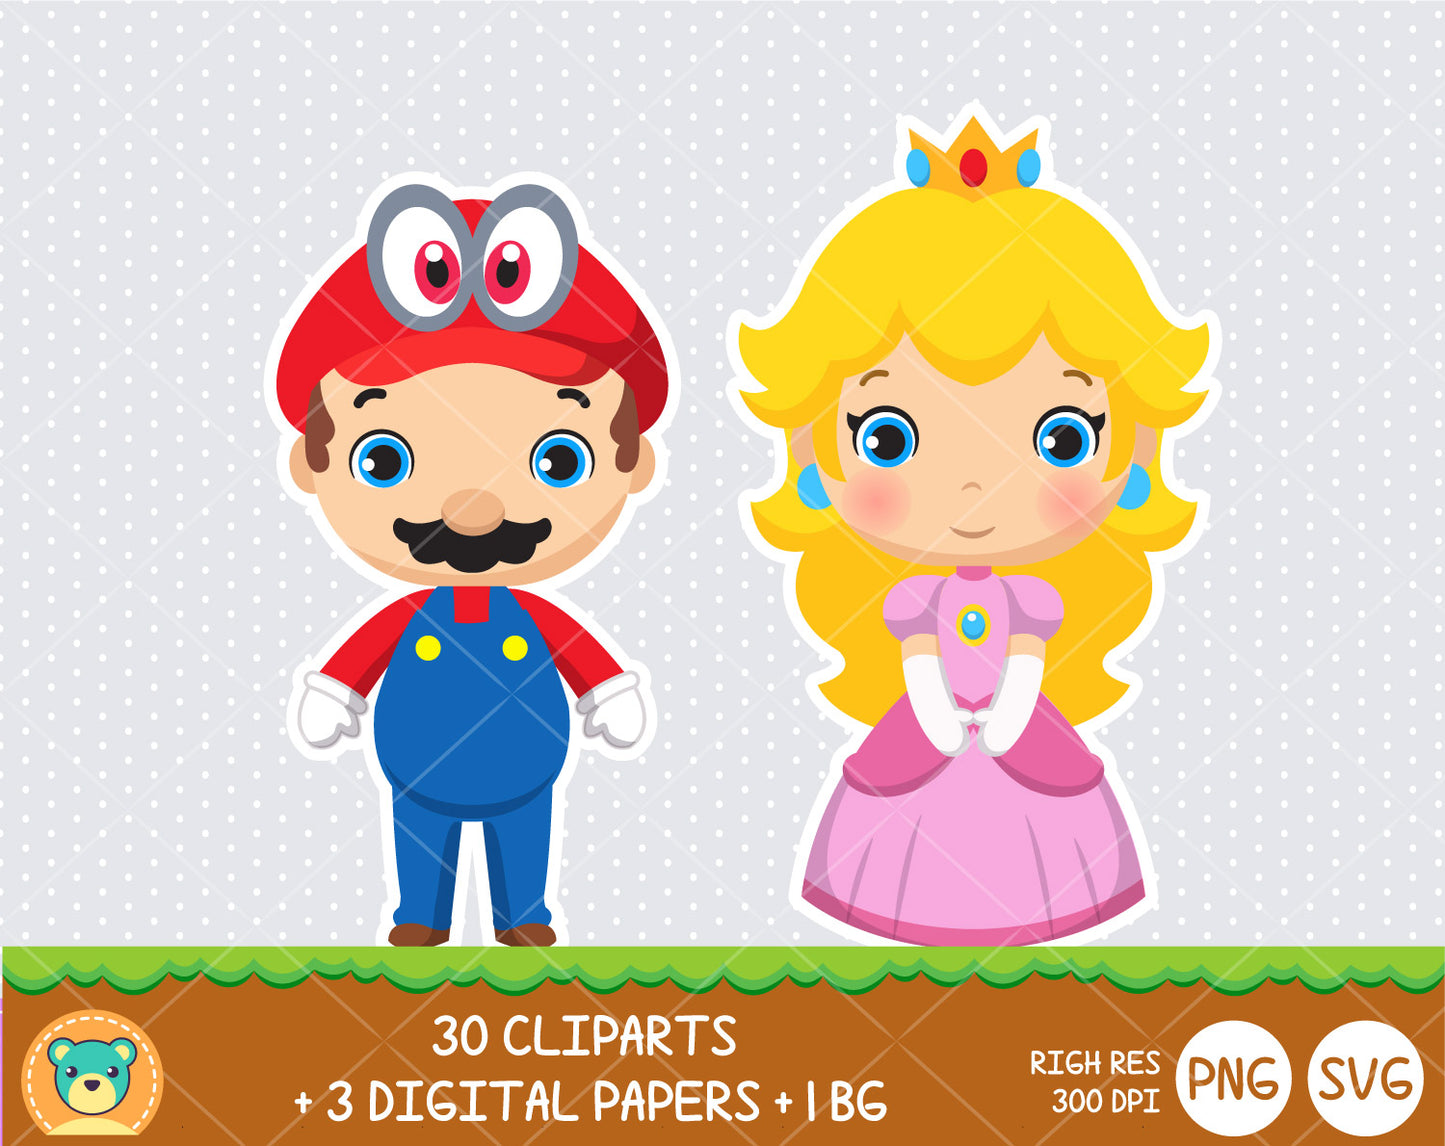 Cute Mario clipart set, Digital clip art for decoration, scrapbooking, PNG, SVG, instant download